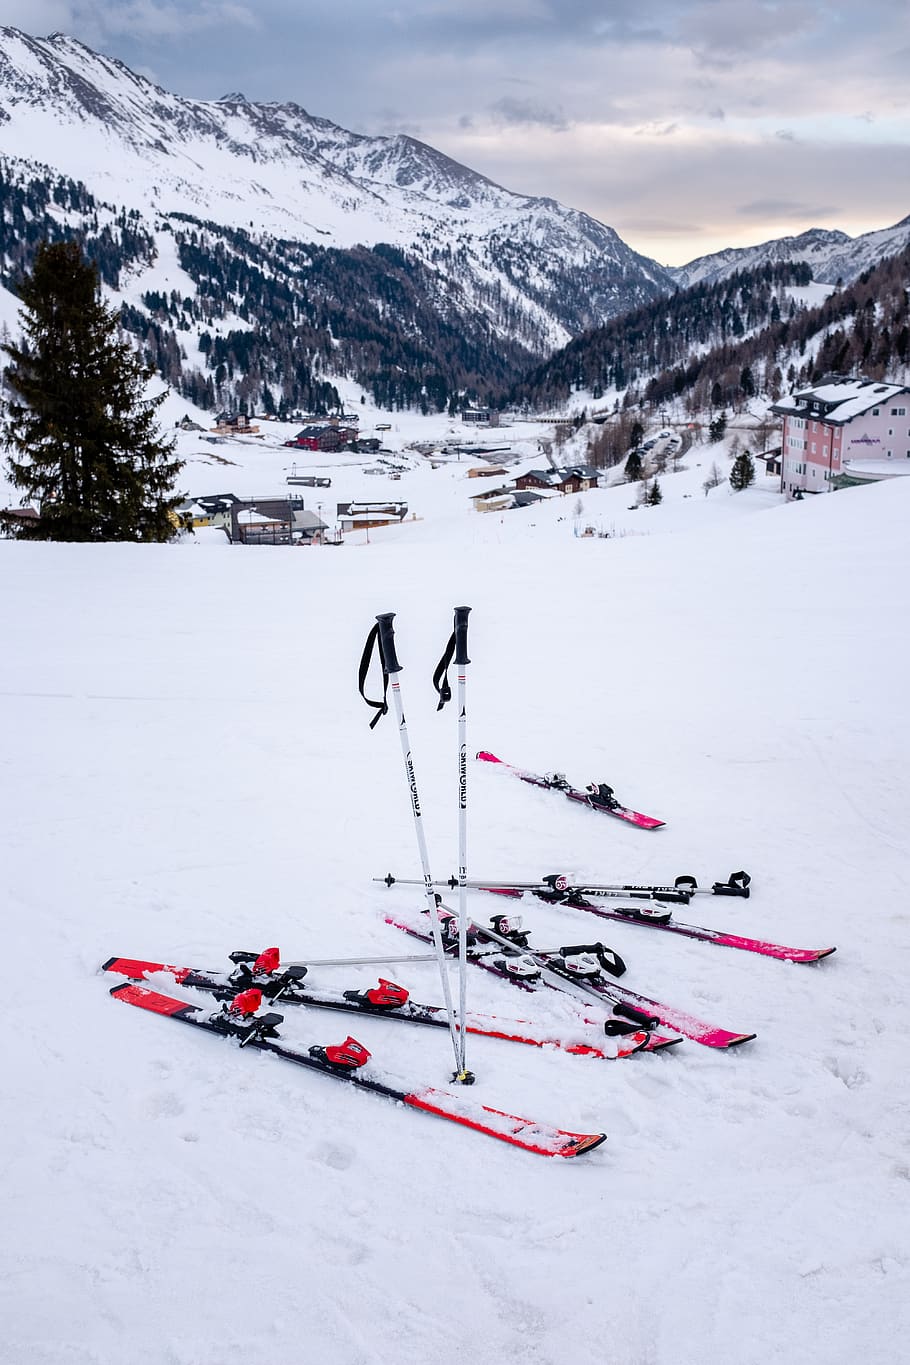 snow skis on snow, nature, outdoors, sport, piste, sports, skiing